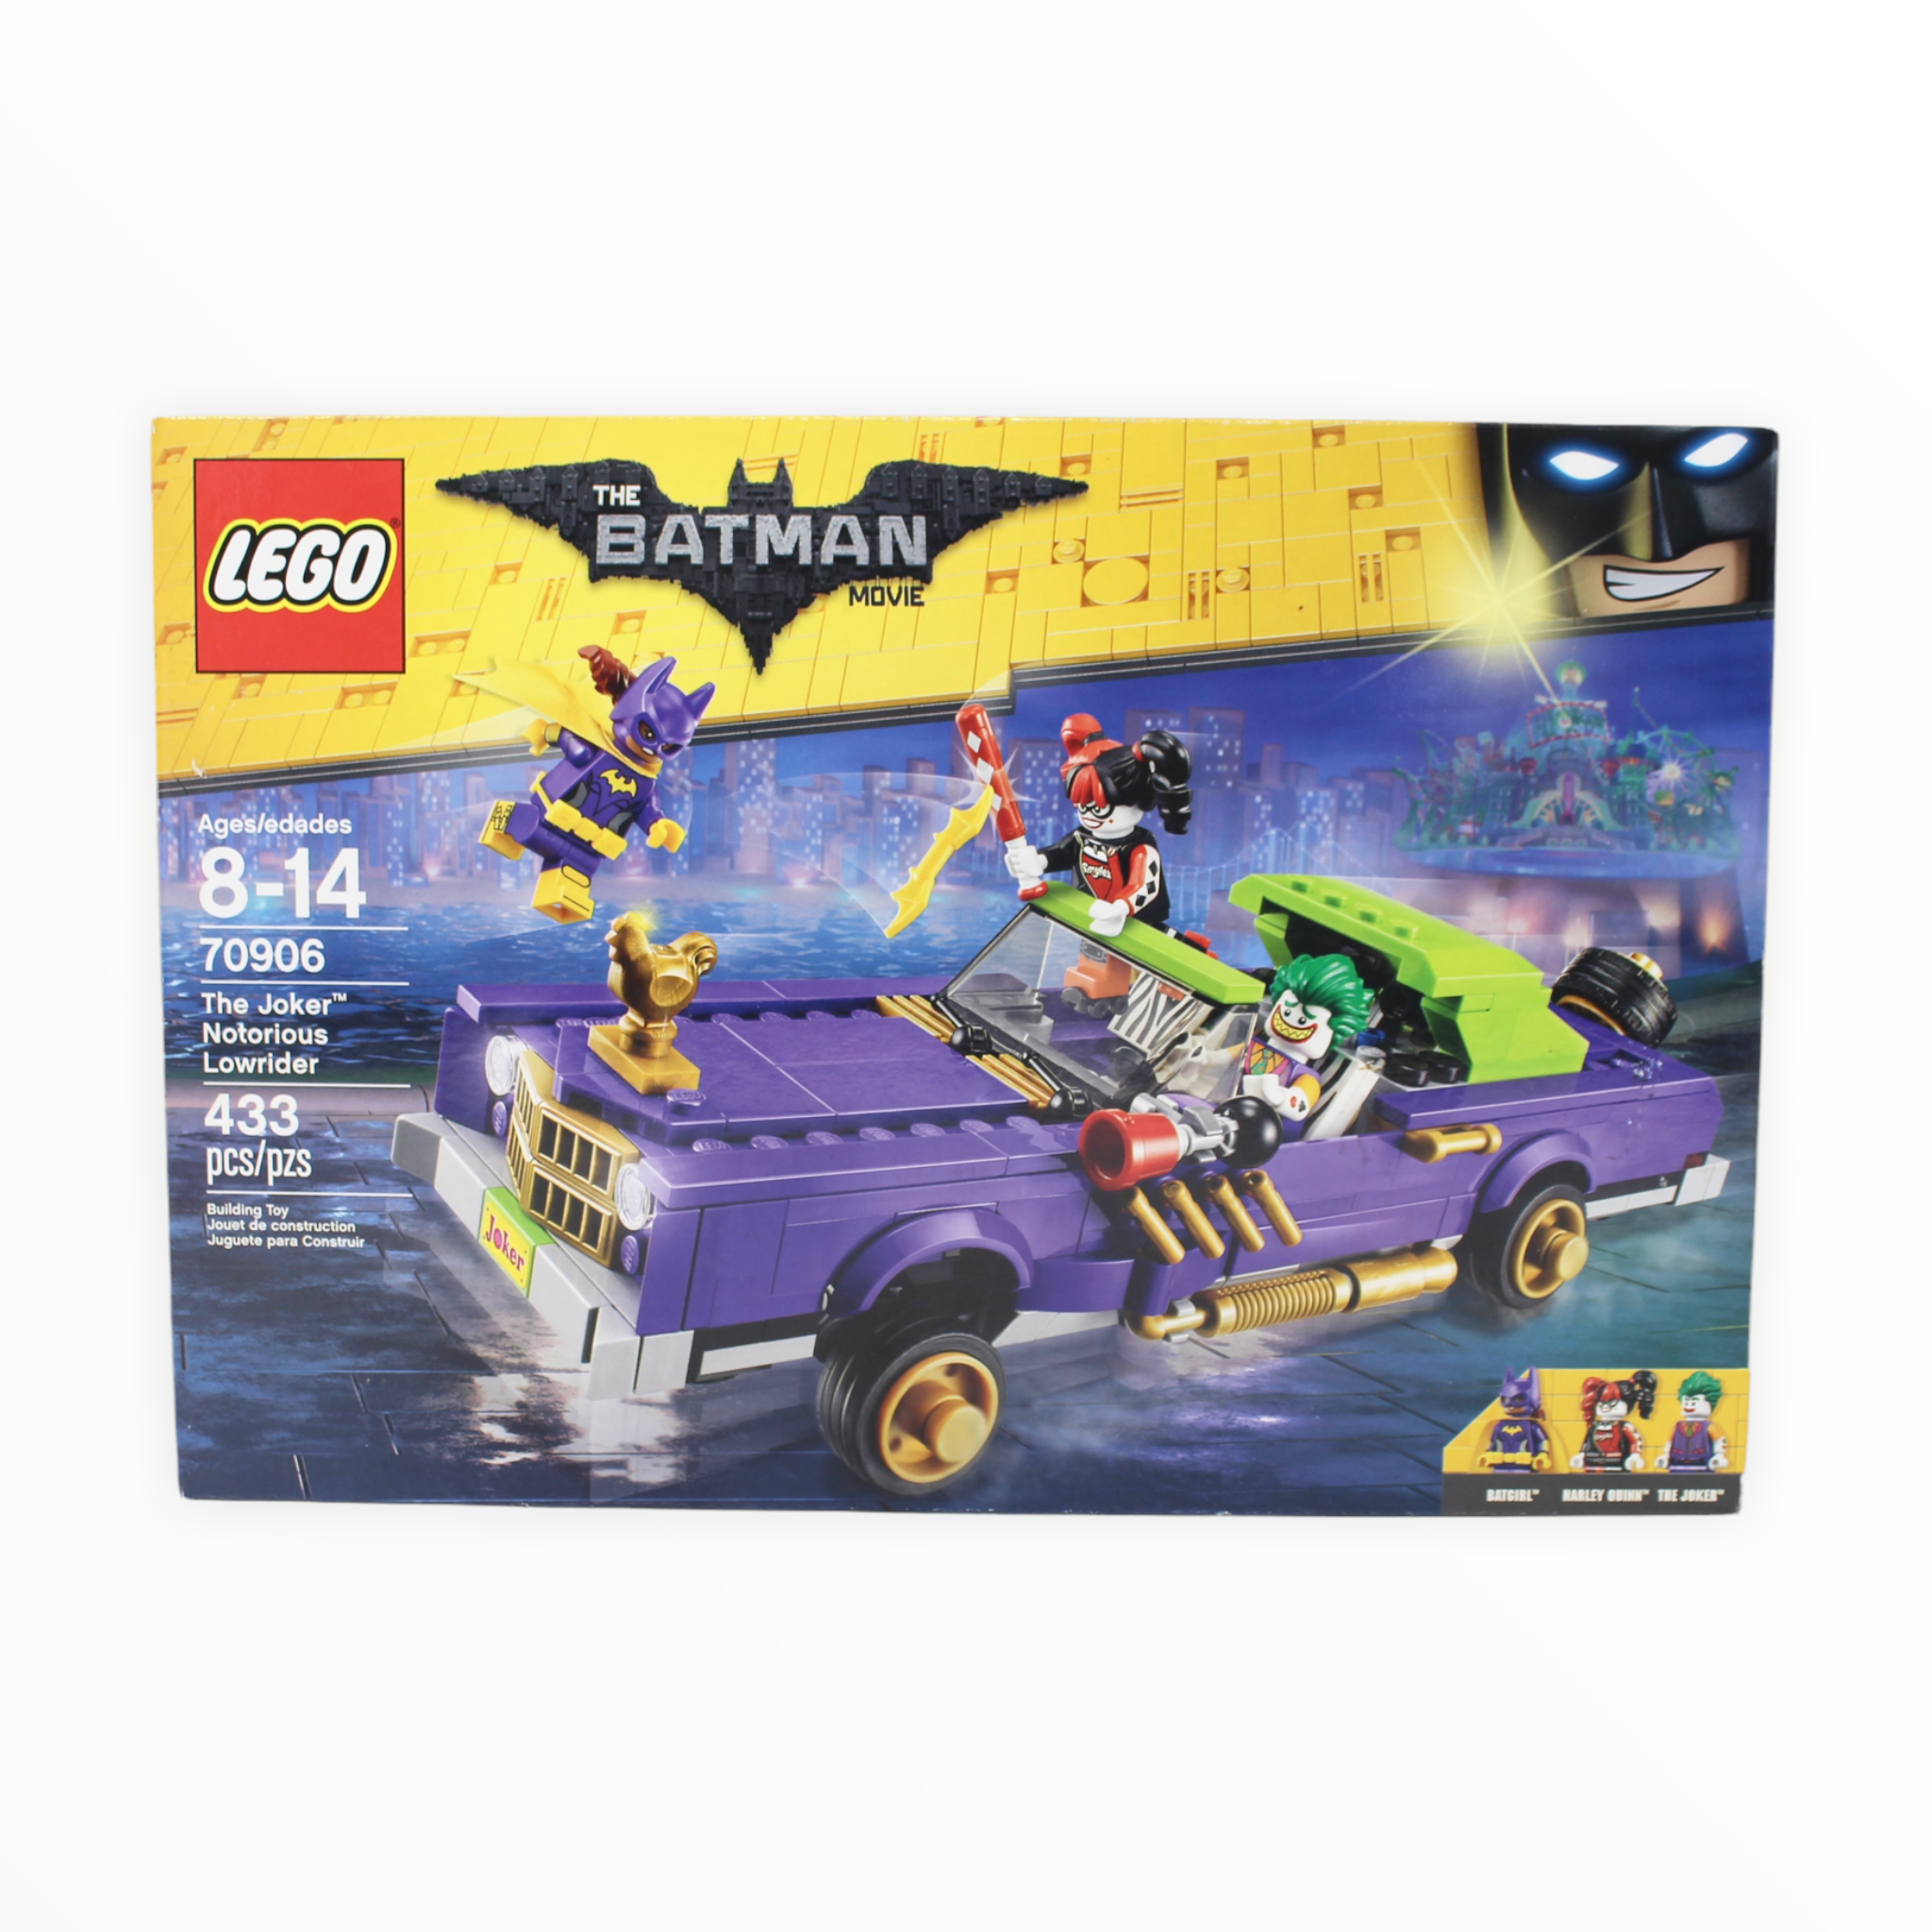 Retired Set 70906 The LEGO Batman Movie The Joker Notorious Lowrider